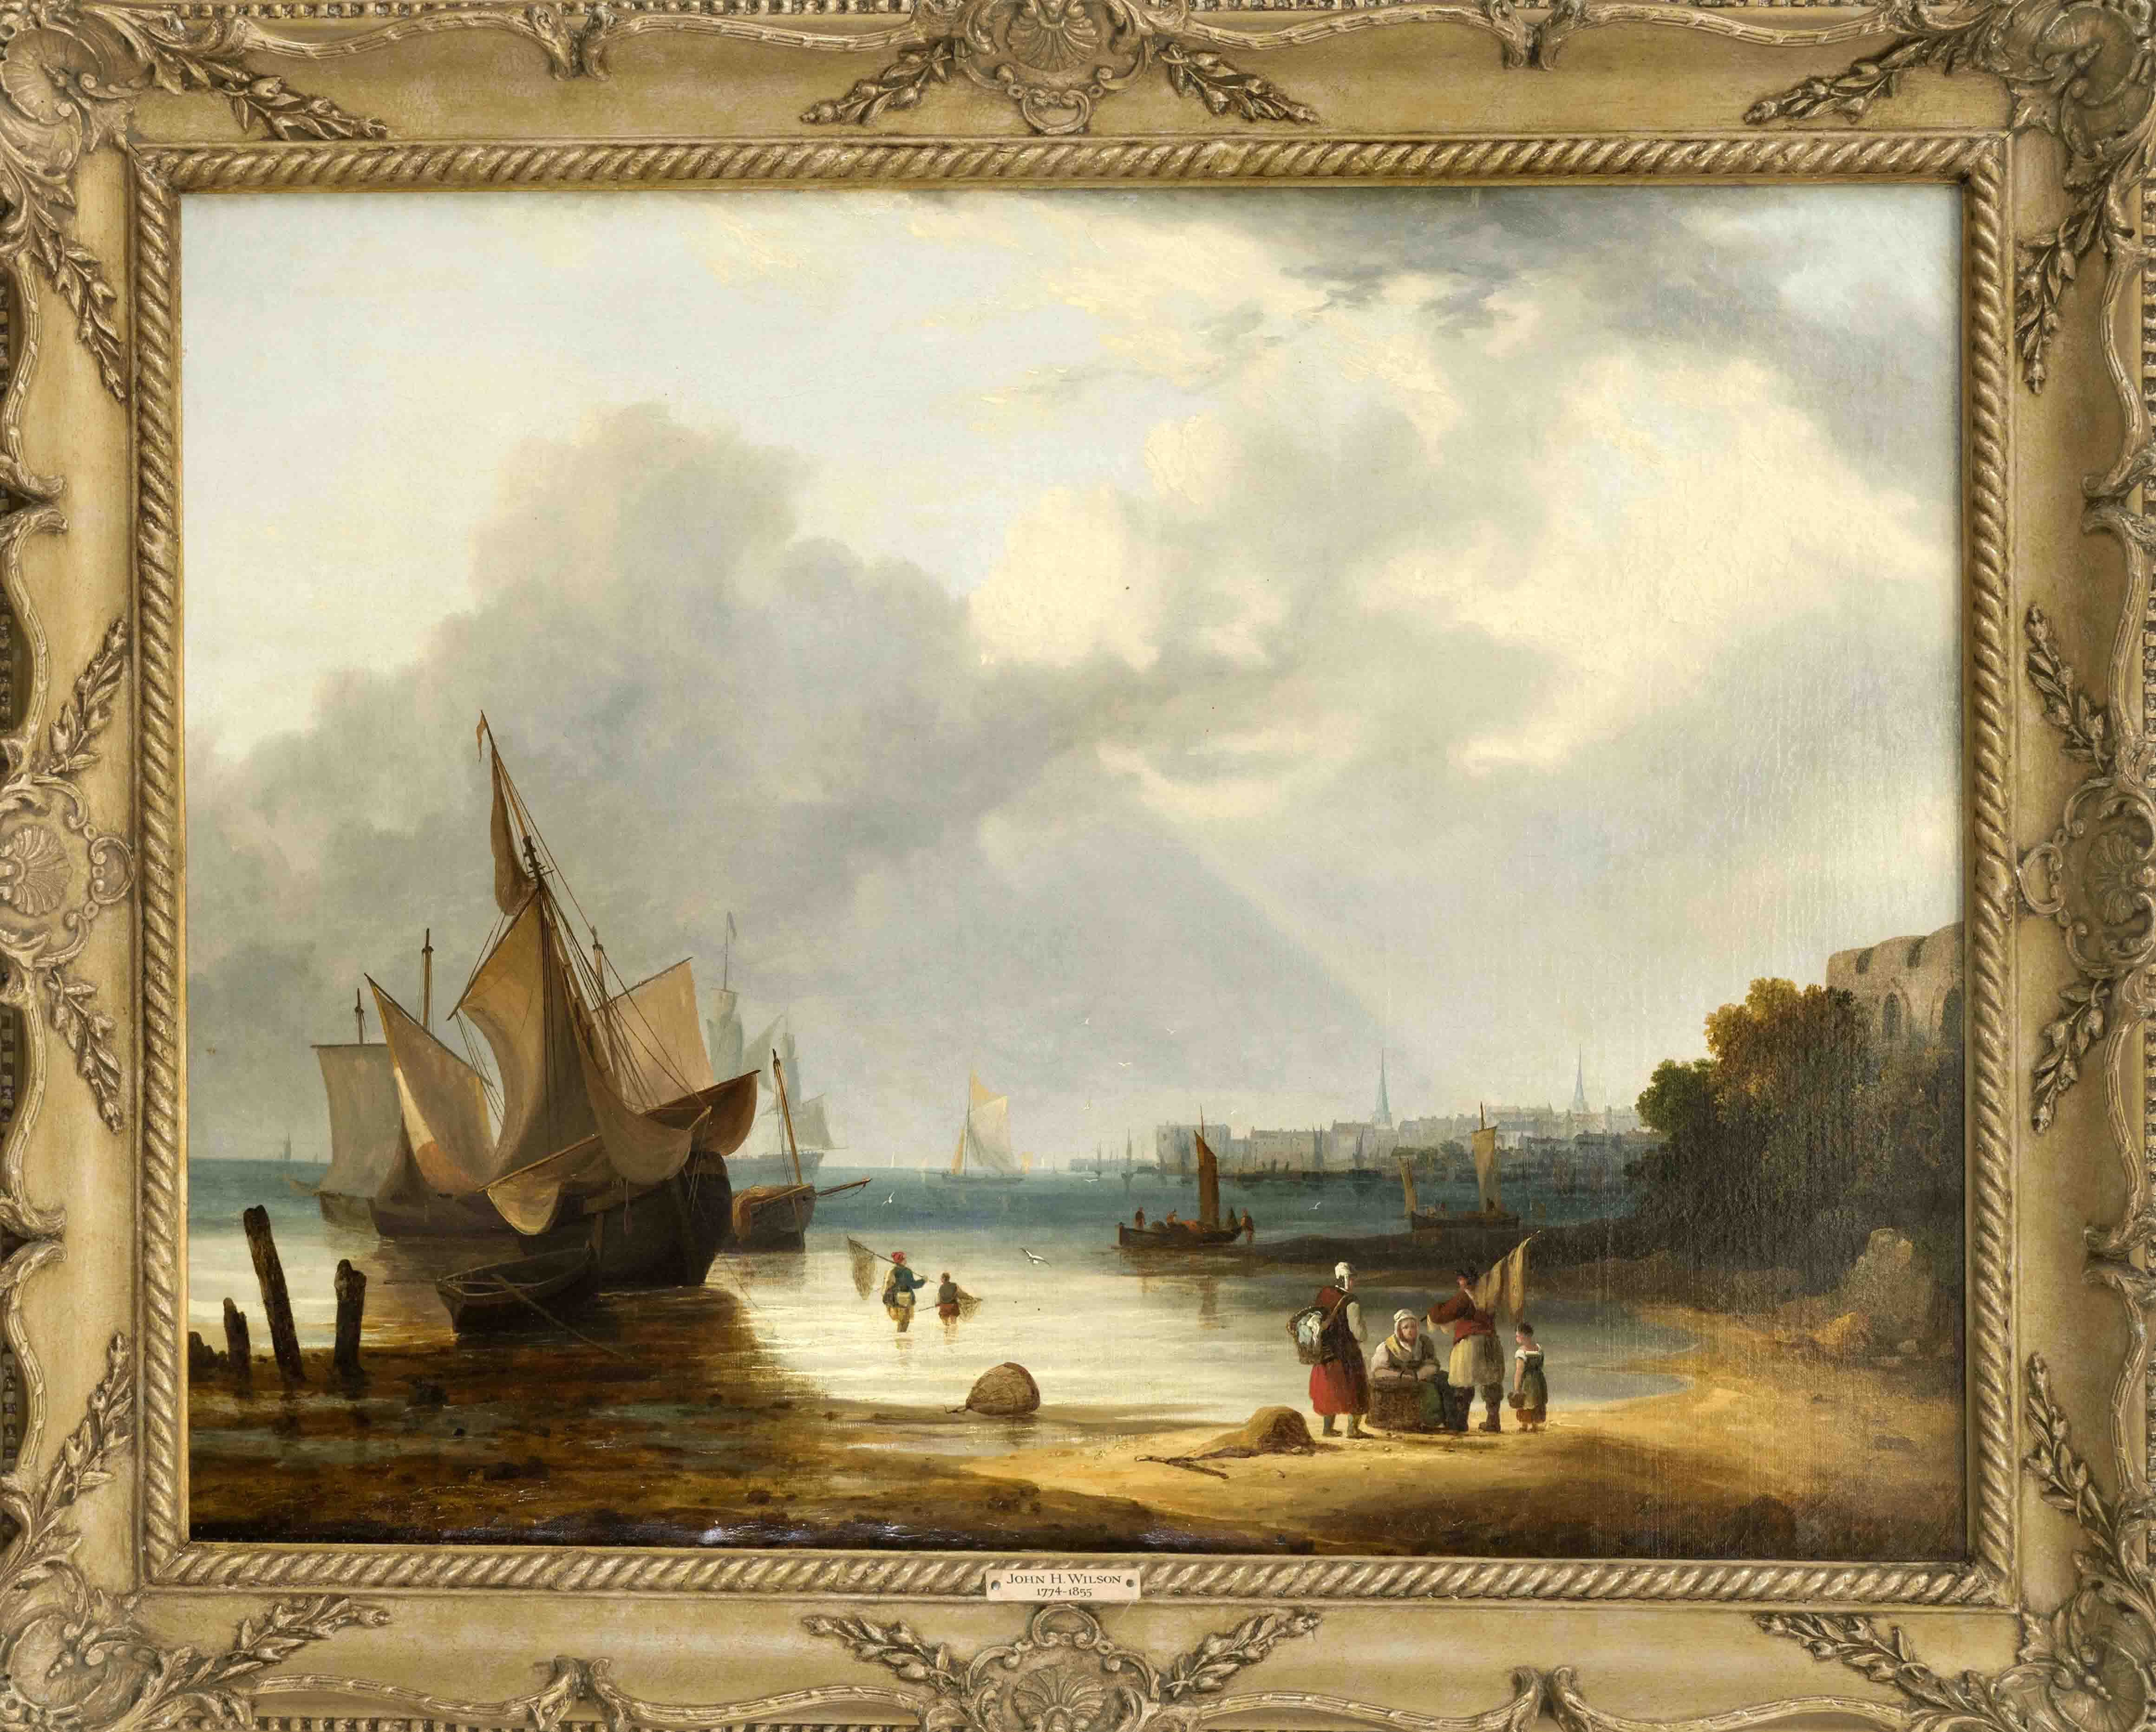 John H. Wilson (1774-1855) (attrib.), English marine painter, Northern French coastal scene with